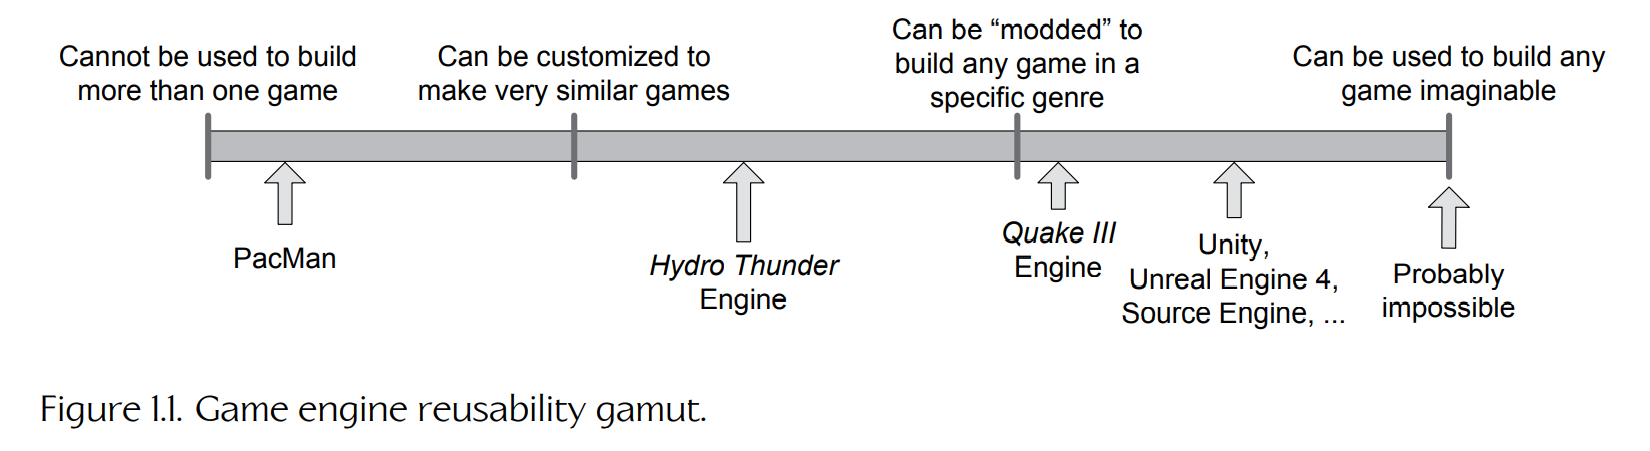 "game-engine-reusability-gamut"